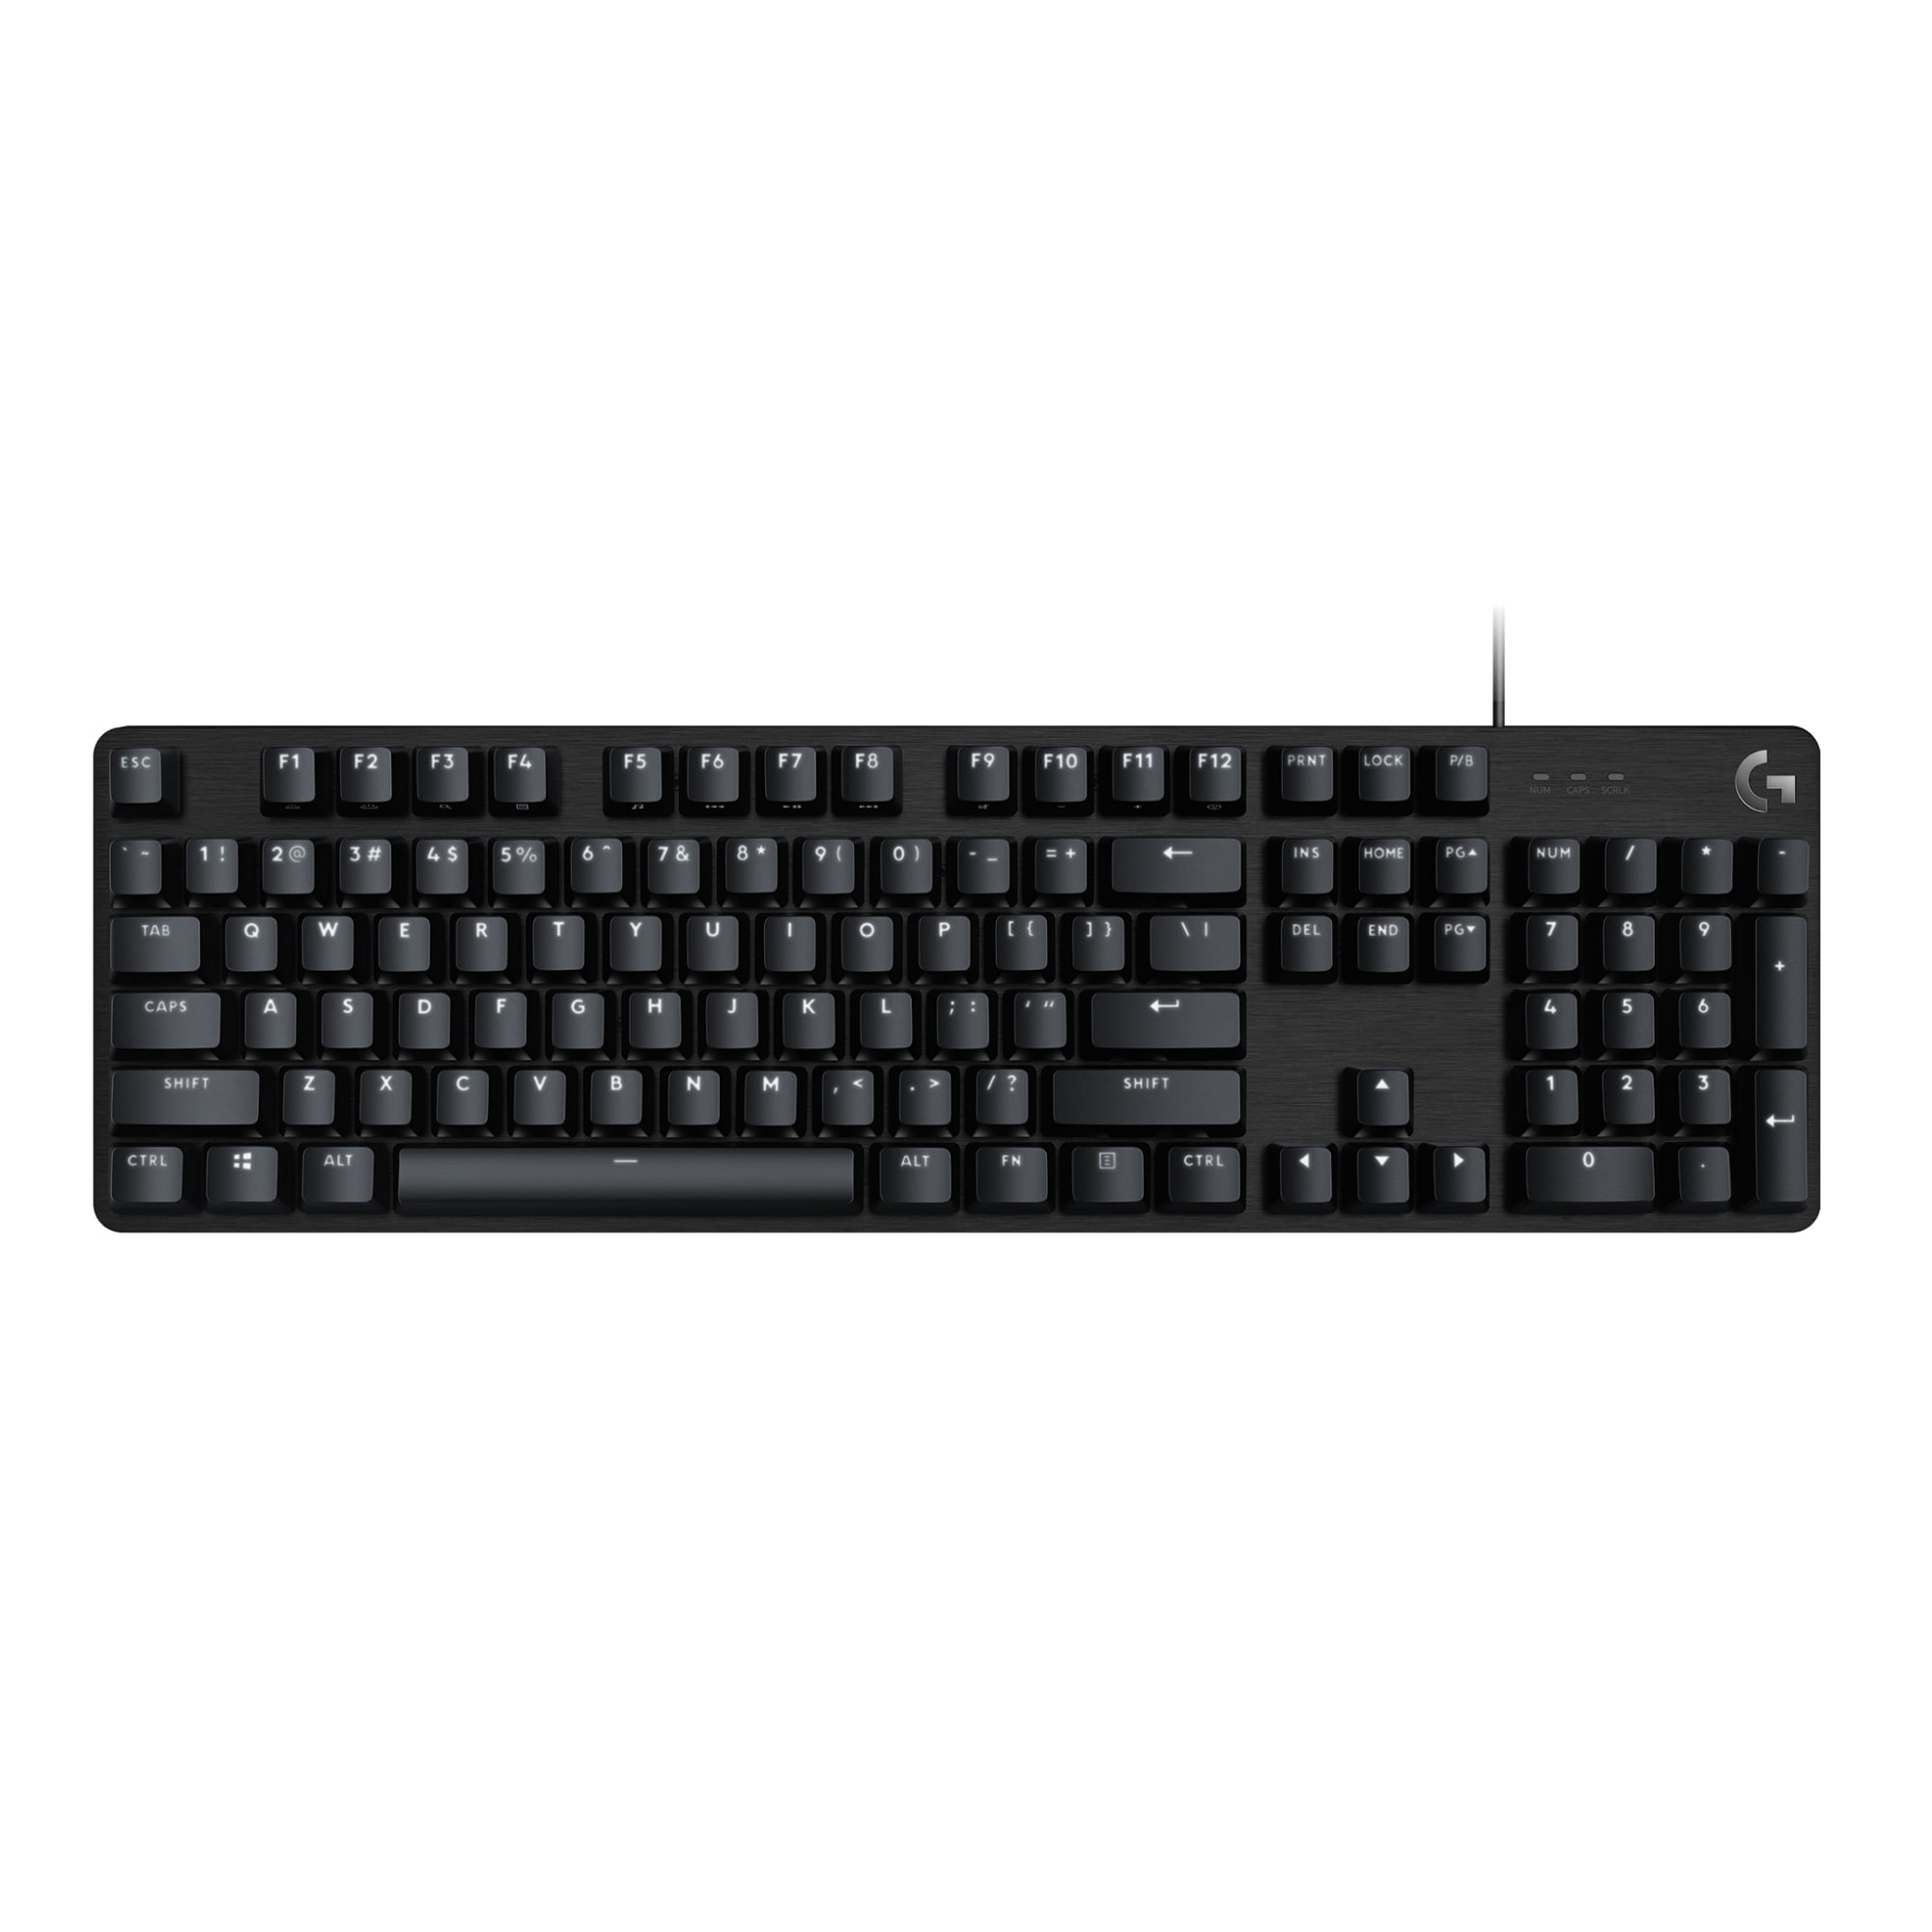 Logitech G413 SE Full-Size Corded Gaming Keyboard, PBT Keycaps, Tactile Mechanical Switches, 6-Key Rollover Anti-Ghosting, FN Keyswhite Backlit LED